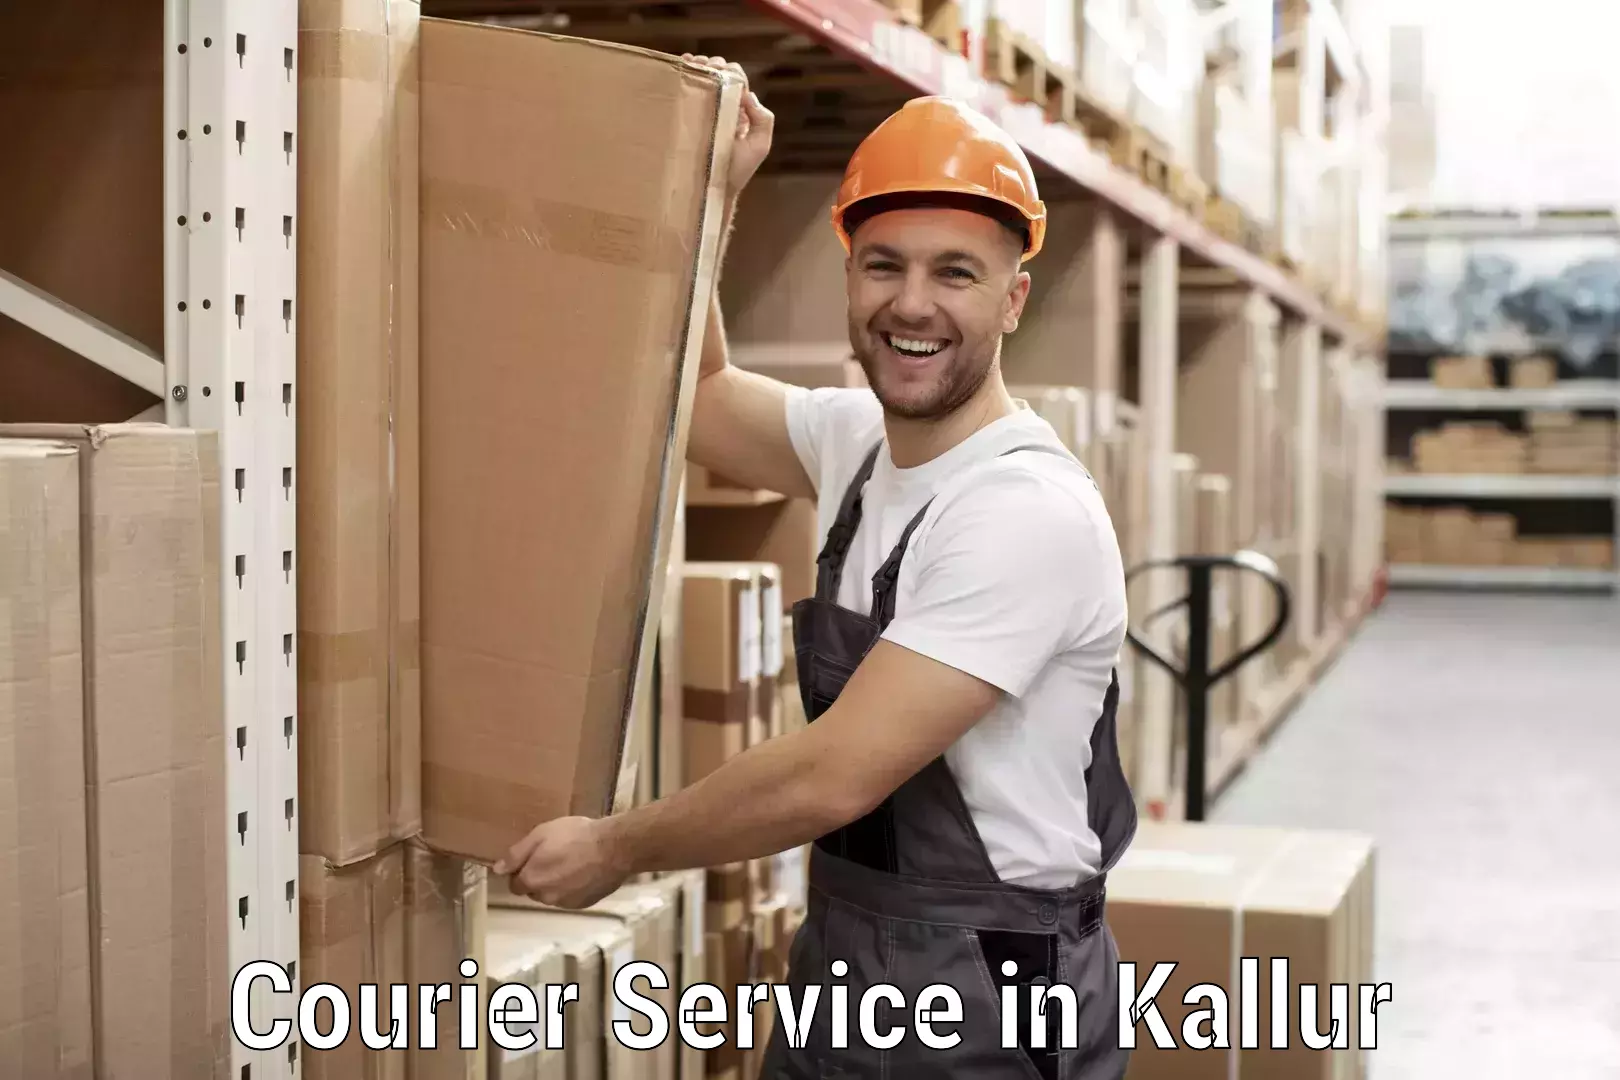 Courier service partnerships in Kallur